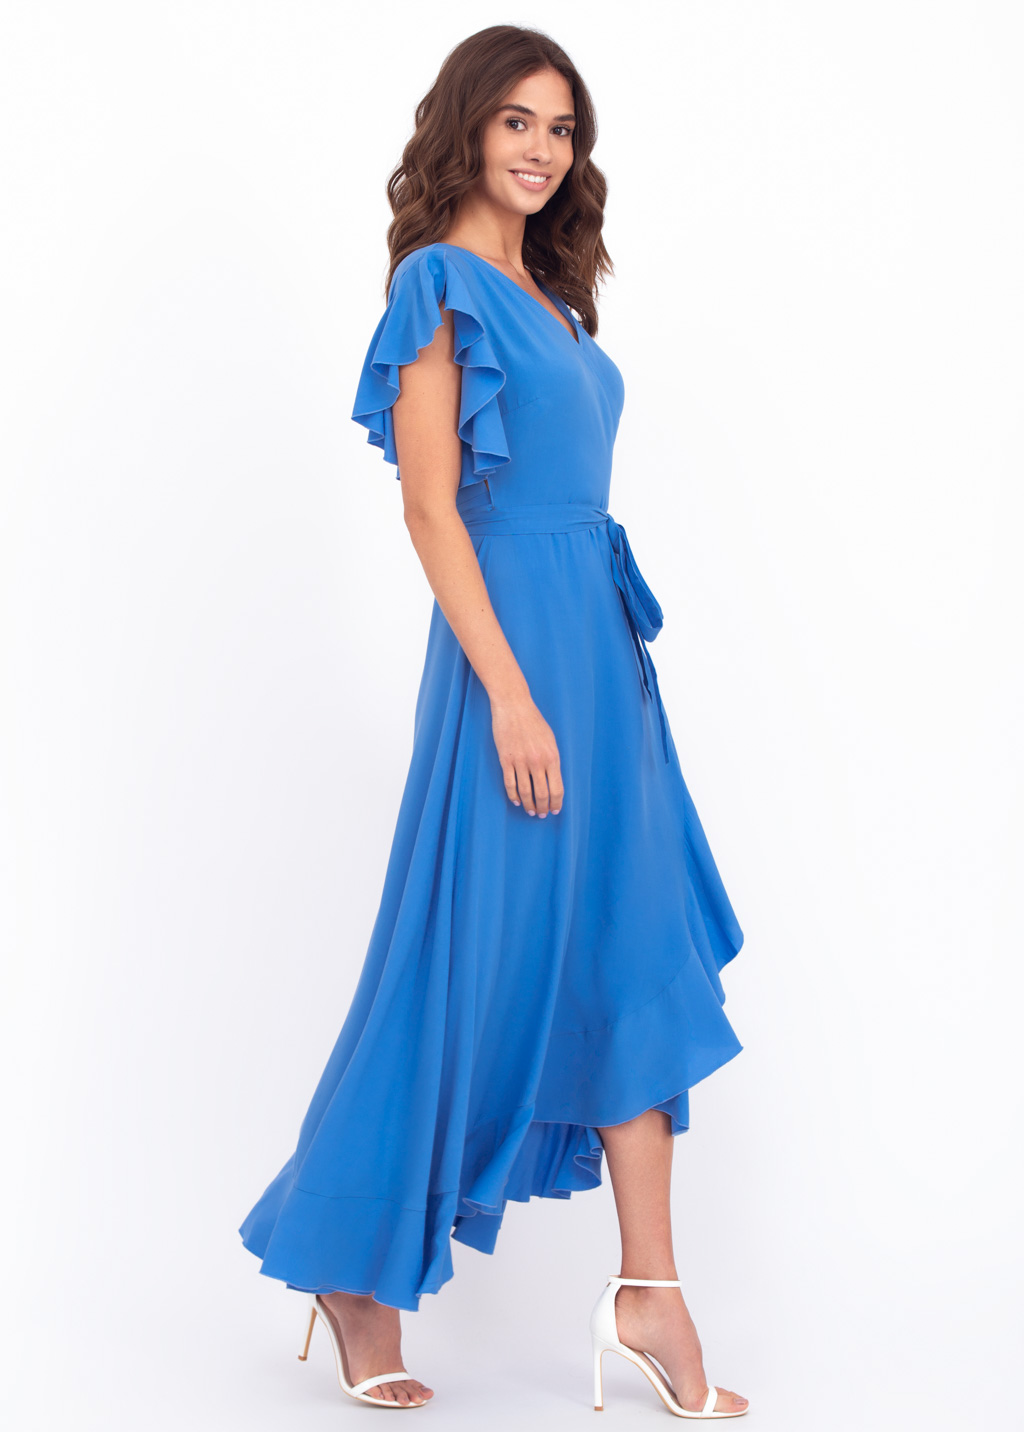 Indigo blue romantic wrap around dress